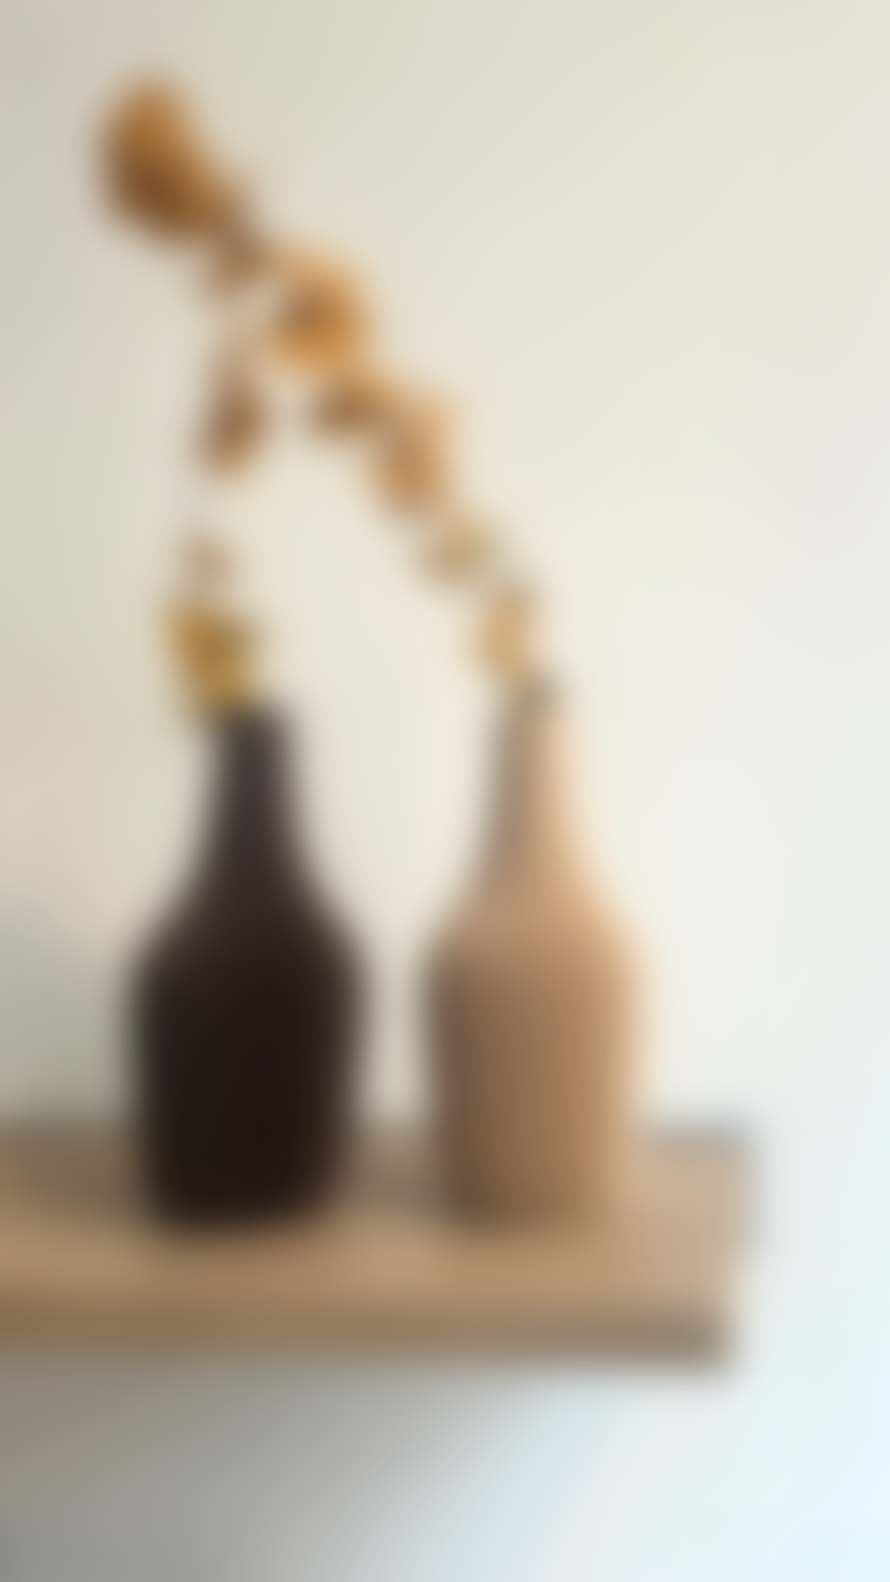 Filament Vase Distinction -